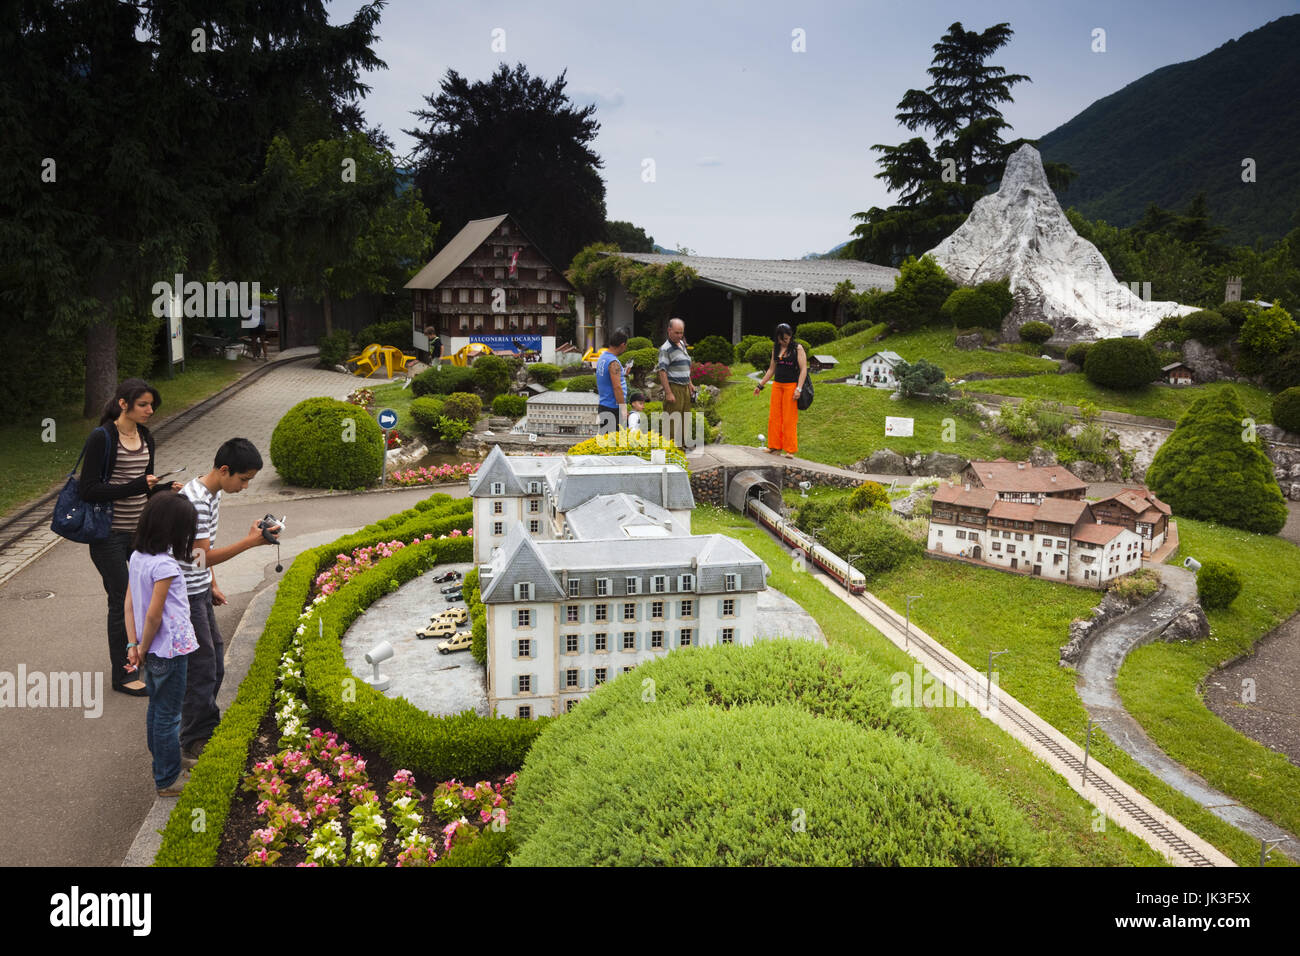 Switzerland, Ticino, Lake Lugano, Melide, Swissminiatur, Miniature Switzerland model theme park, NR, and minature Matterhorn Stock Photo